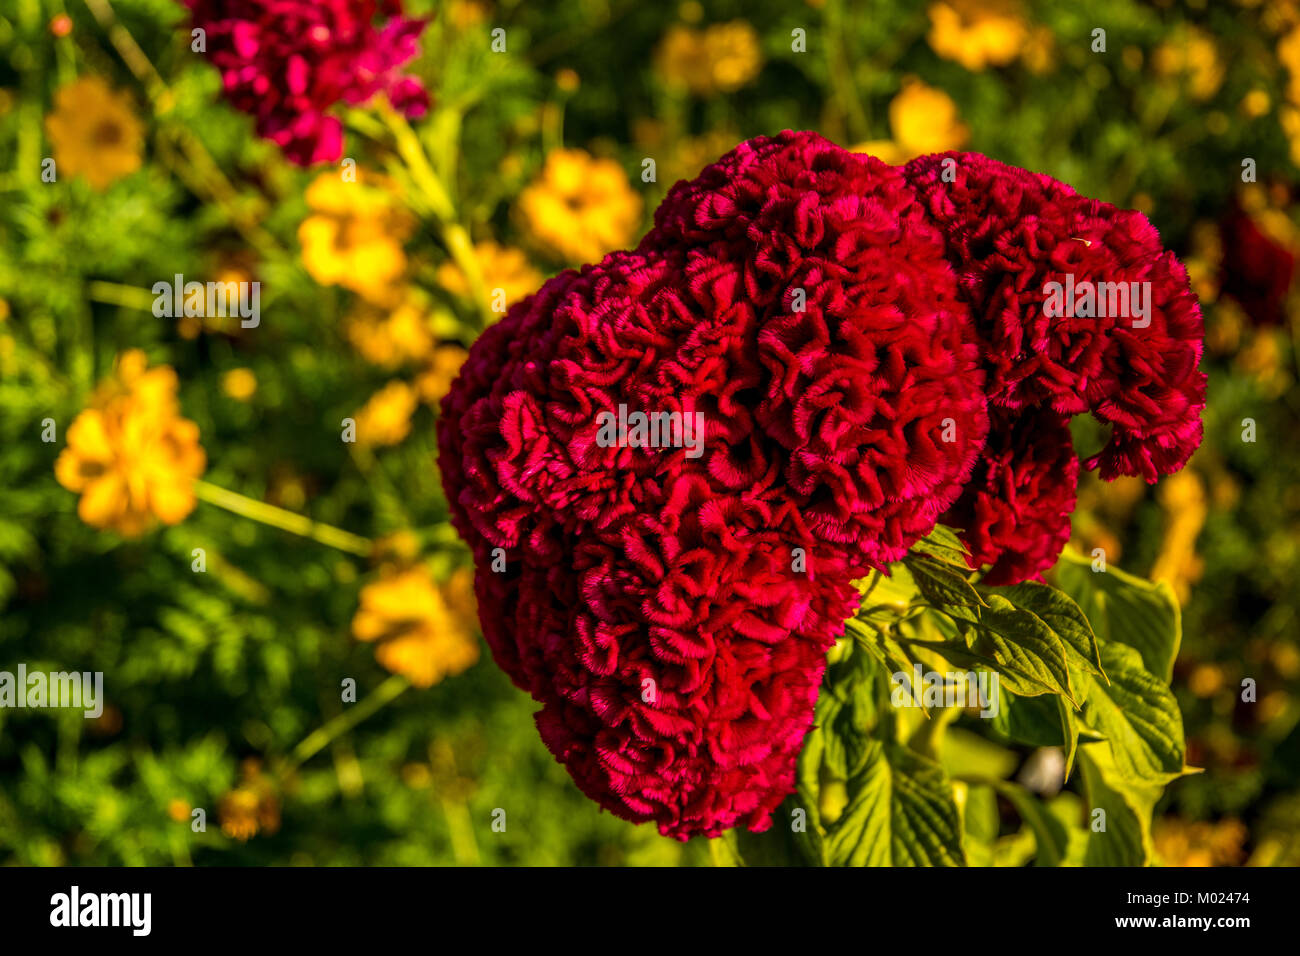 CORDOBA, Andalusien/Spanien - 14. OKTOBER 2017: rote Blume Stockfoto